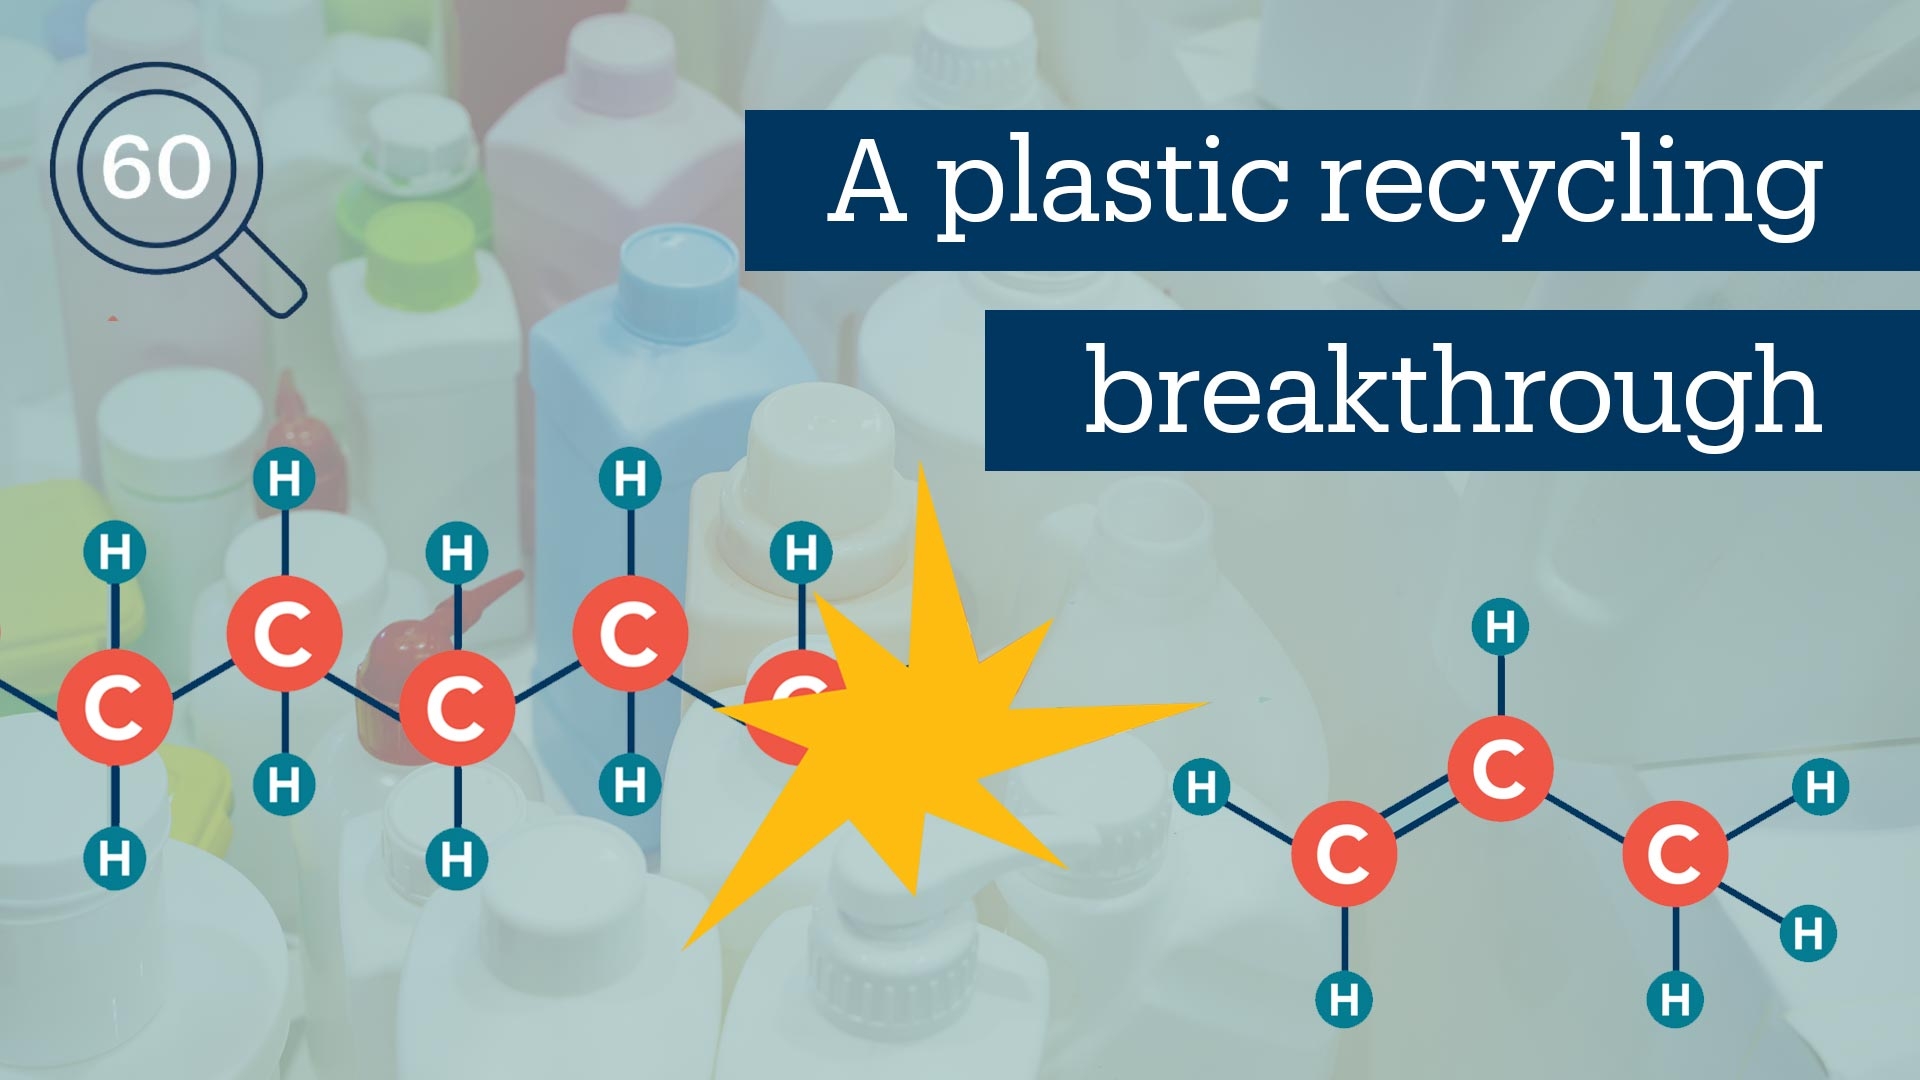 Illustration of molecular chain overlaid on image of plastic bottles